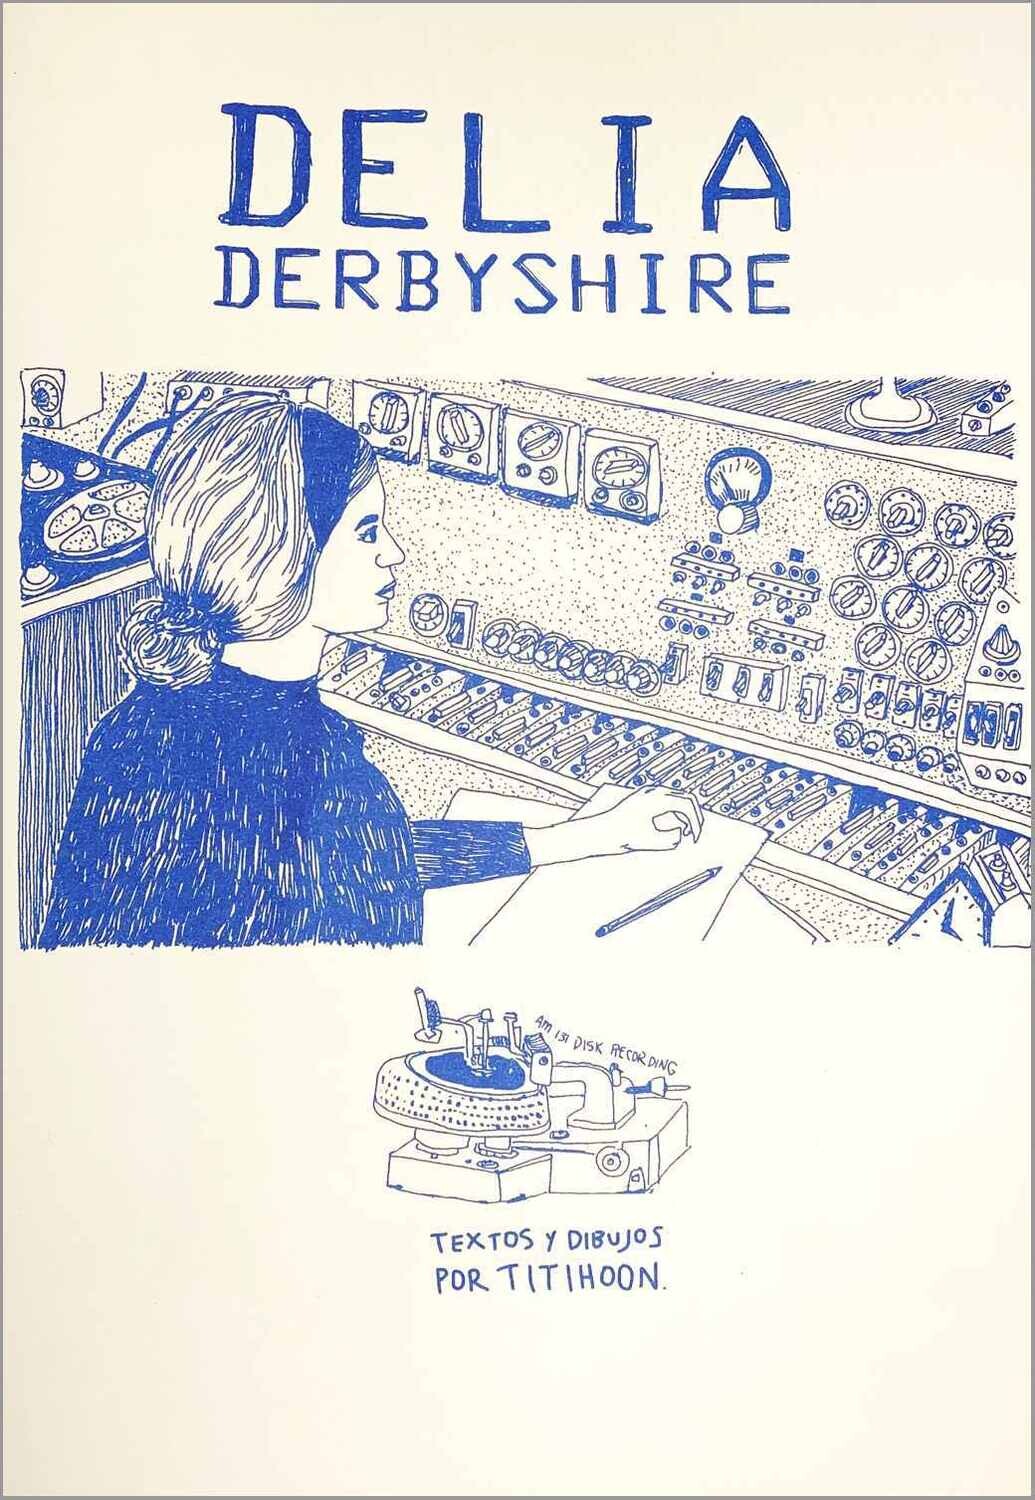 Delia Derbyshire by Titihoon - Zine in Spanish